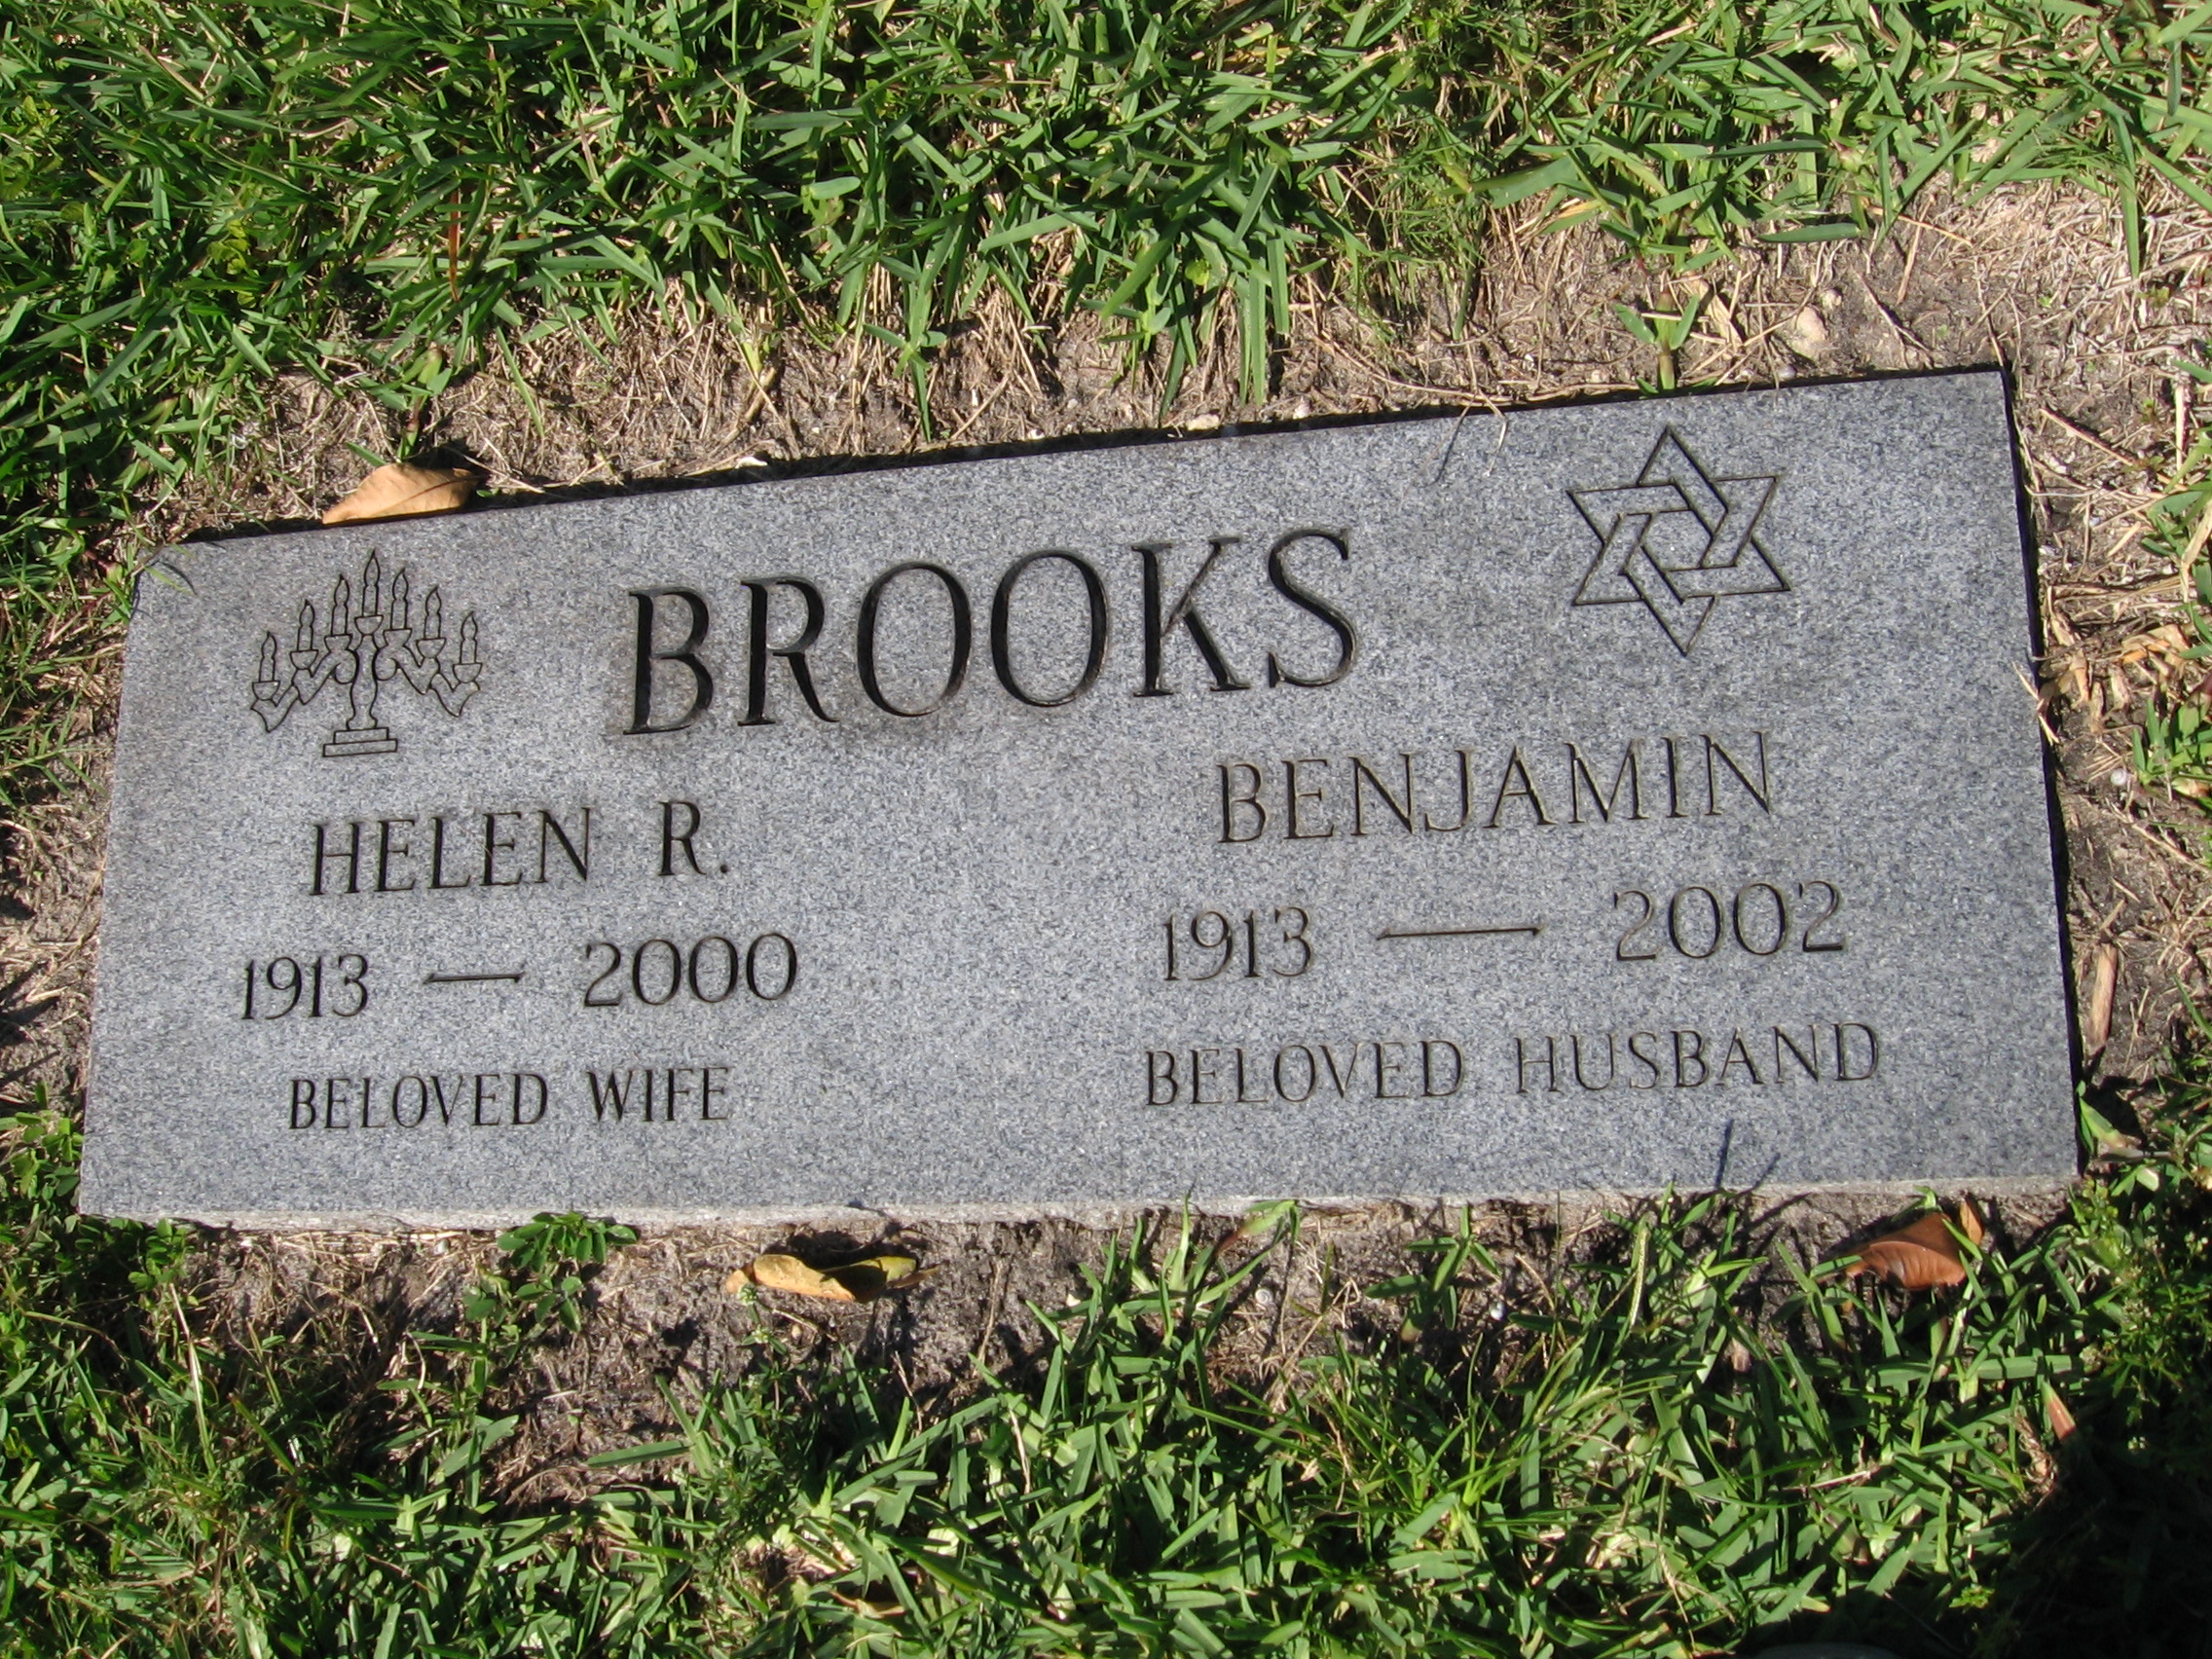 Helen R Brooks